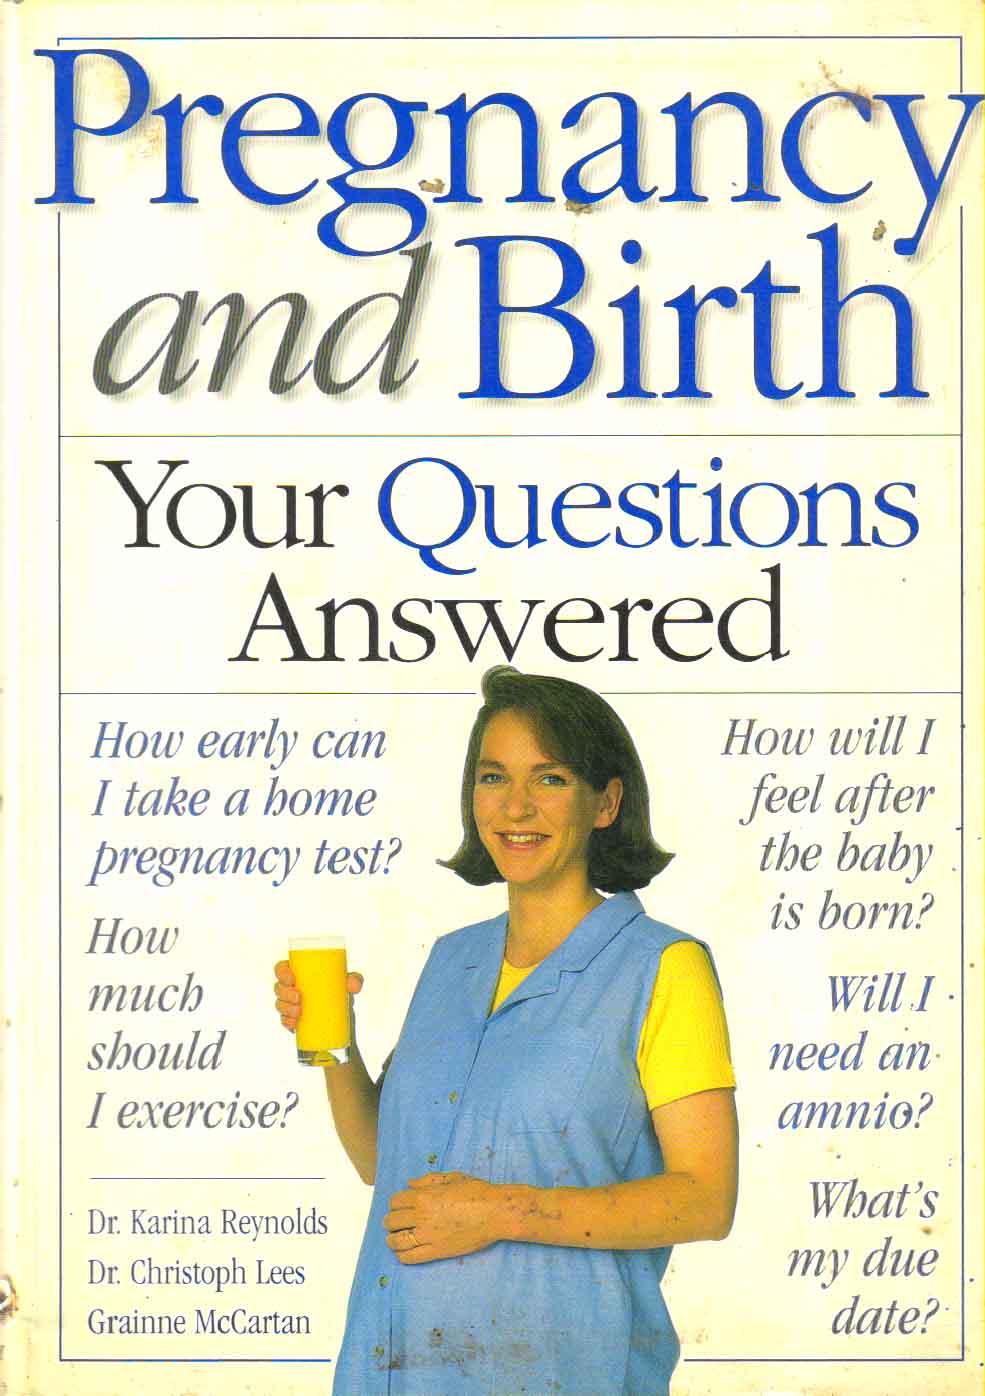 Pregnancy & Birth